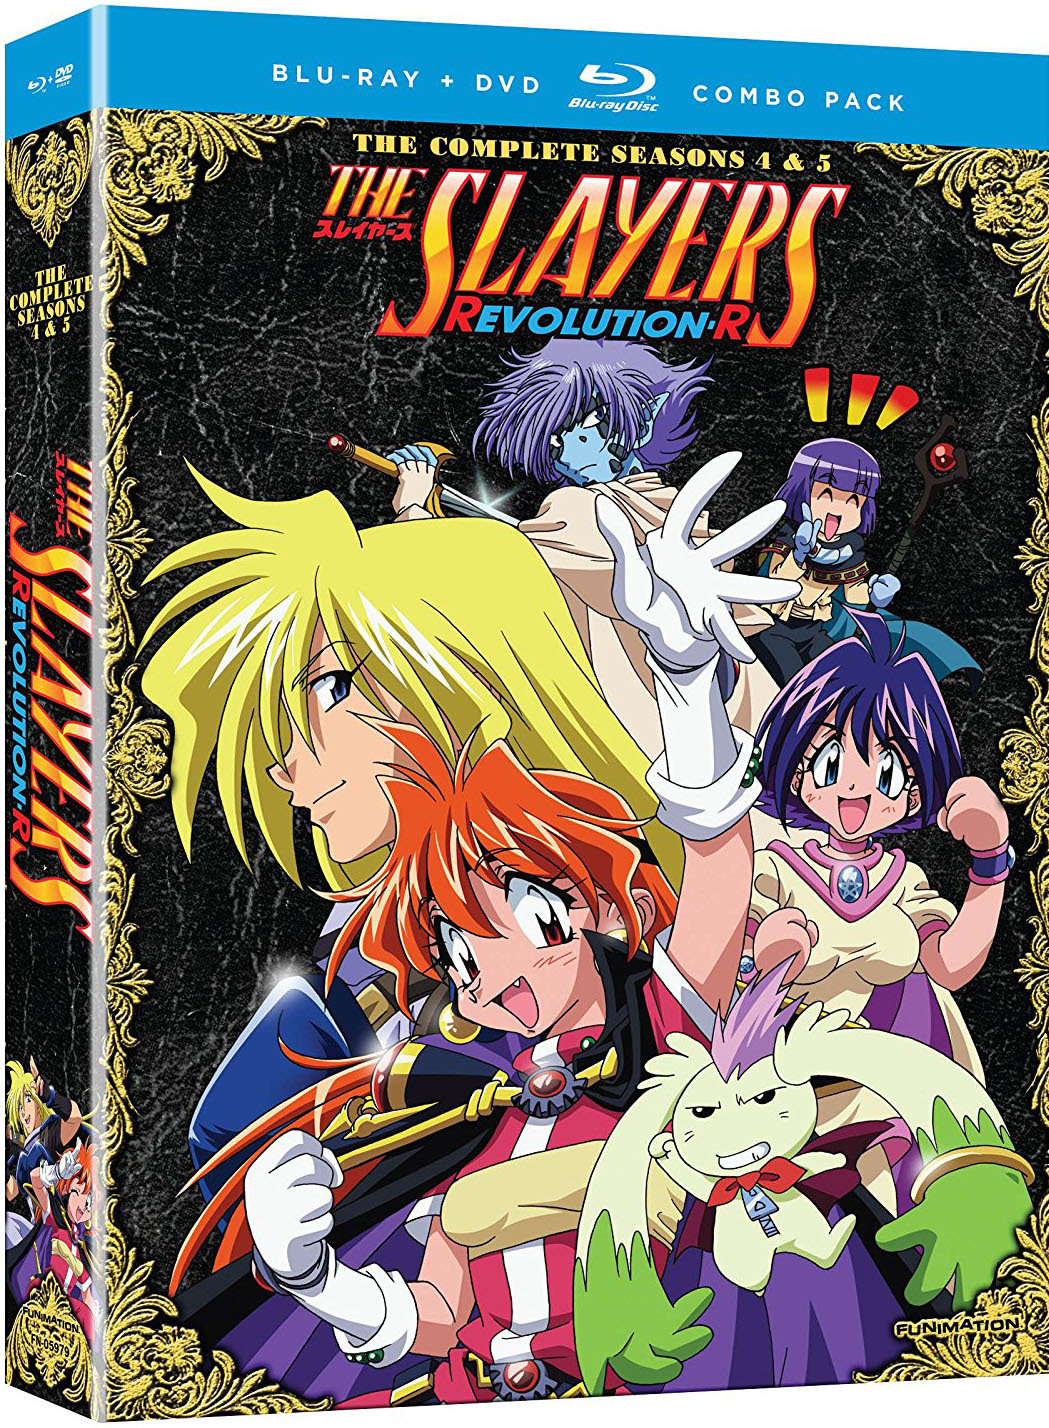 Slayers, The: Seasons 4 & 5